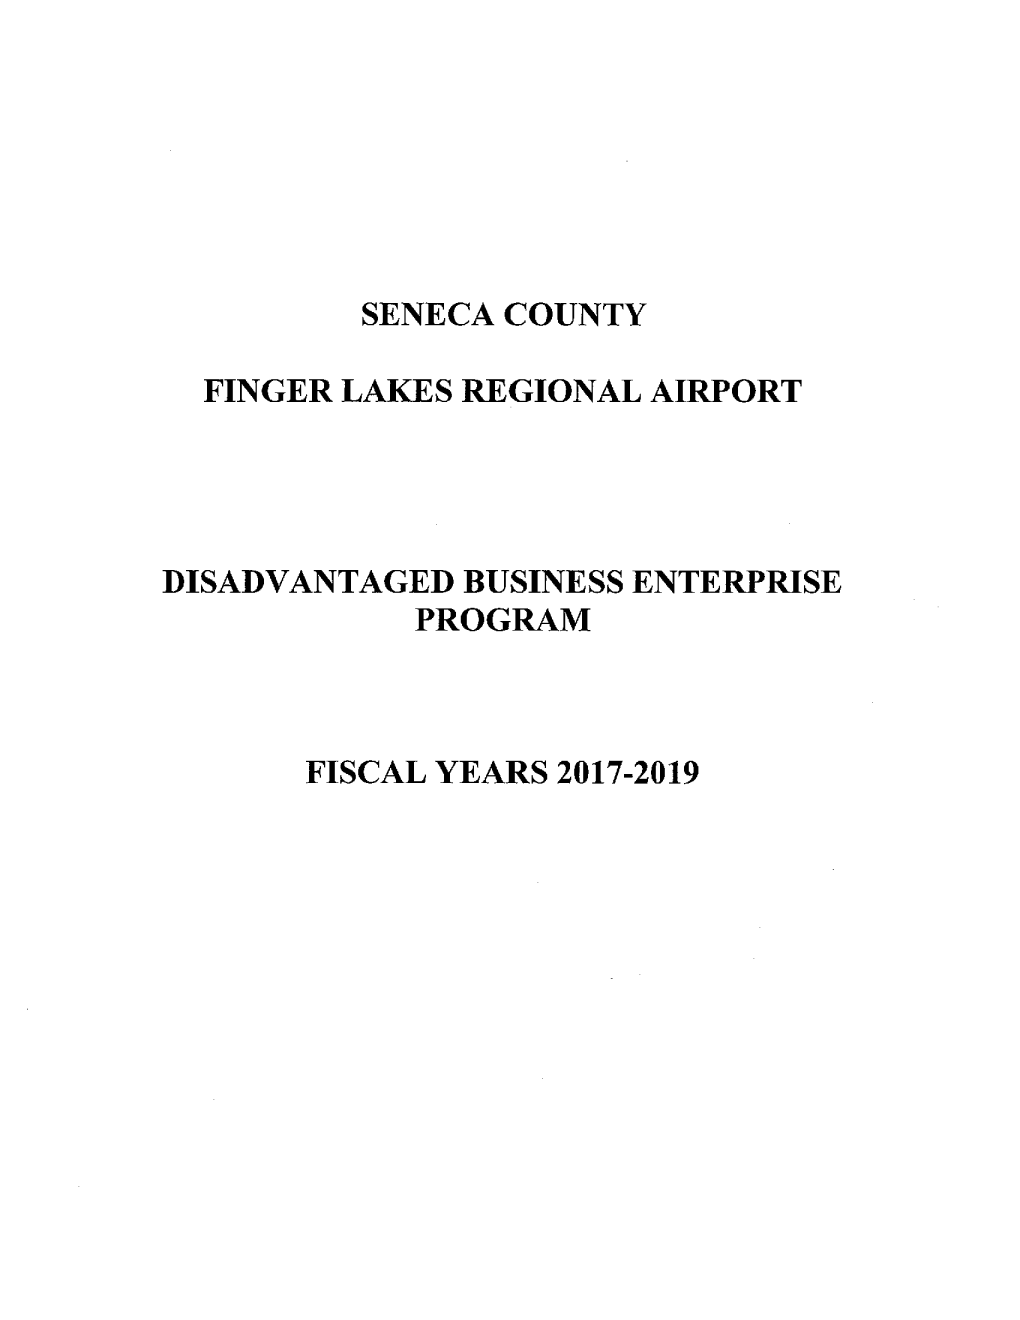 Finger Lakes Regional Airport